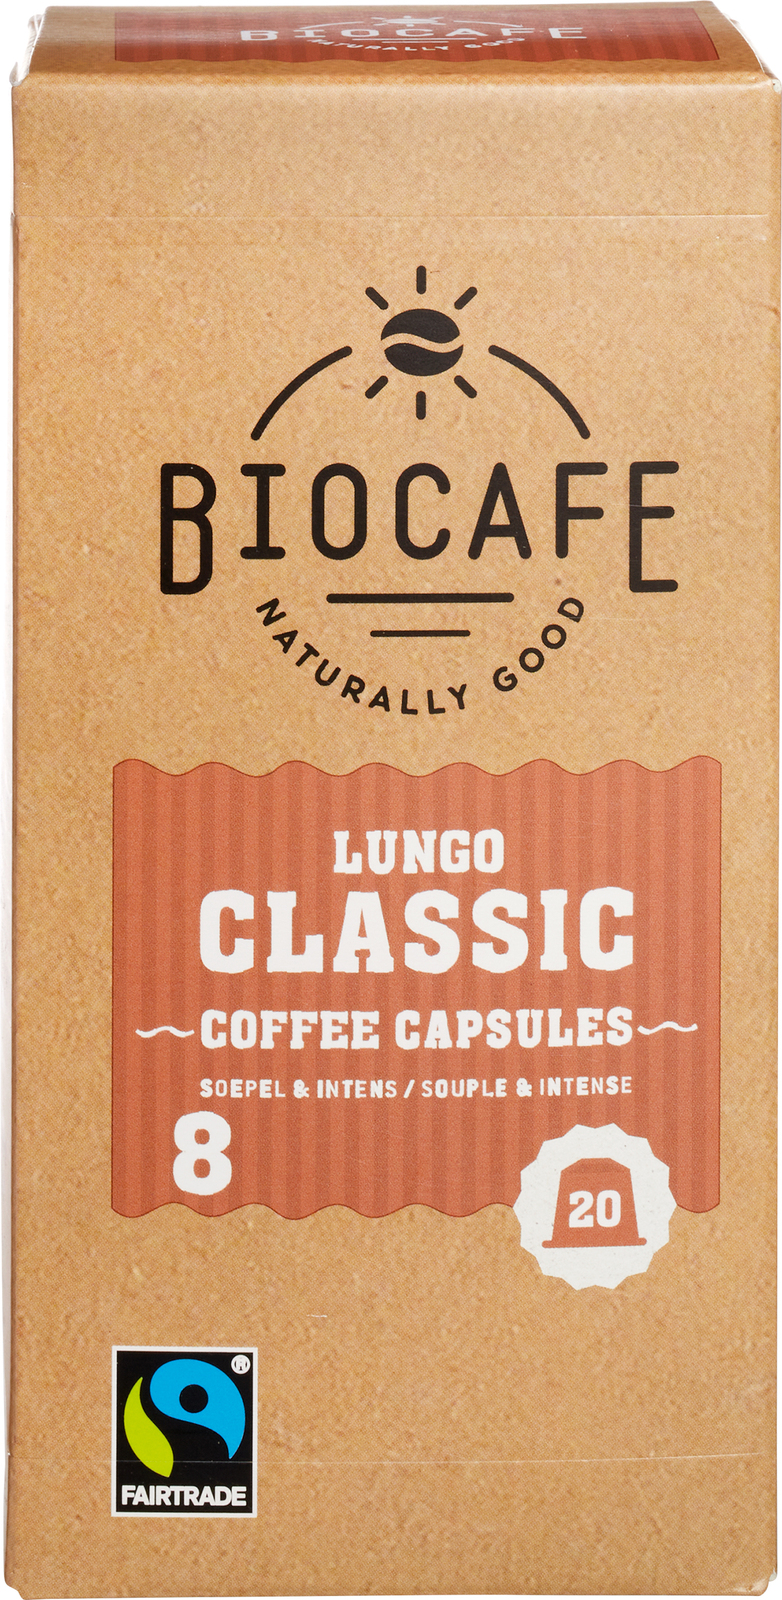 Bio Cafe Koffiecapsules Lungo Classic